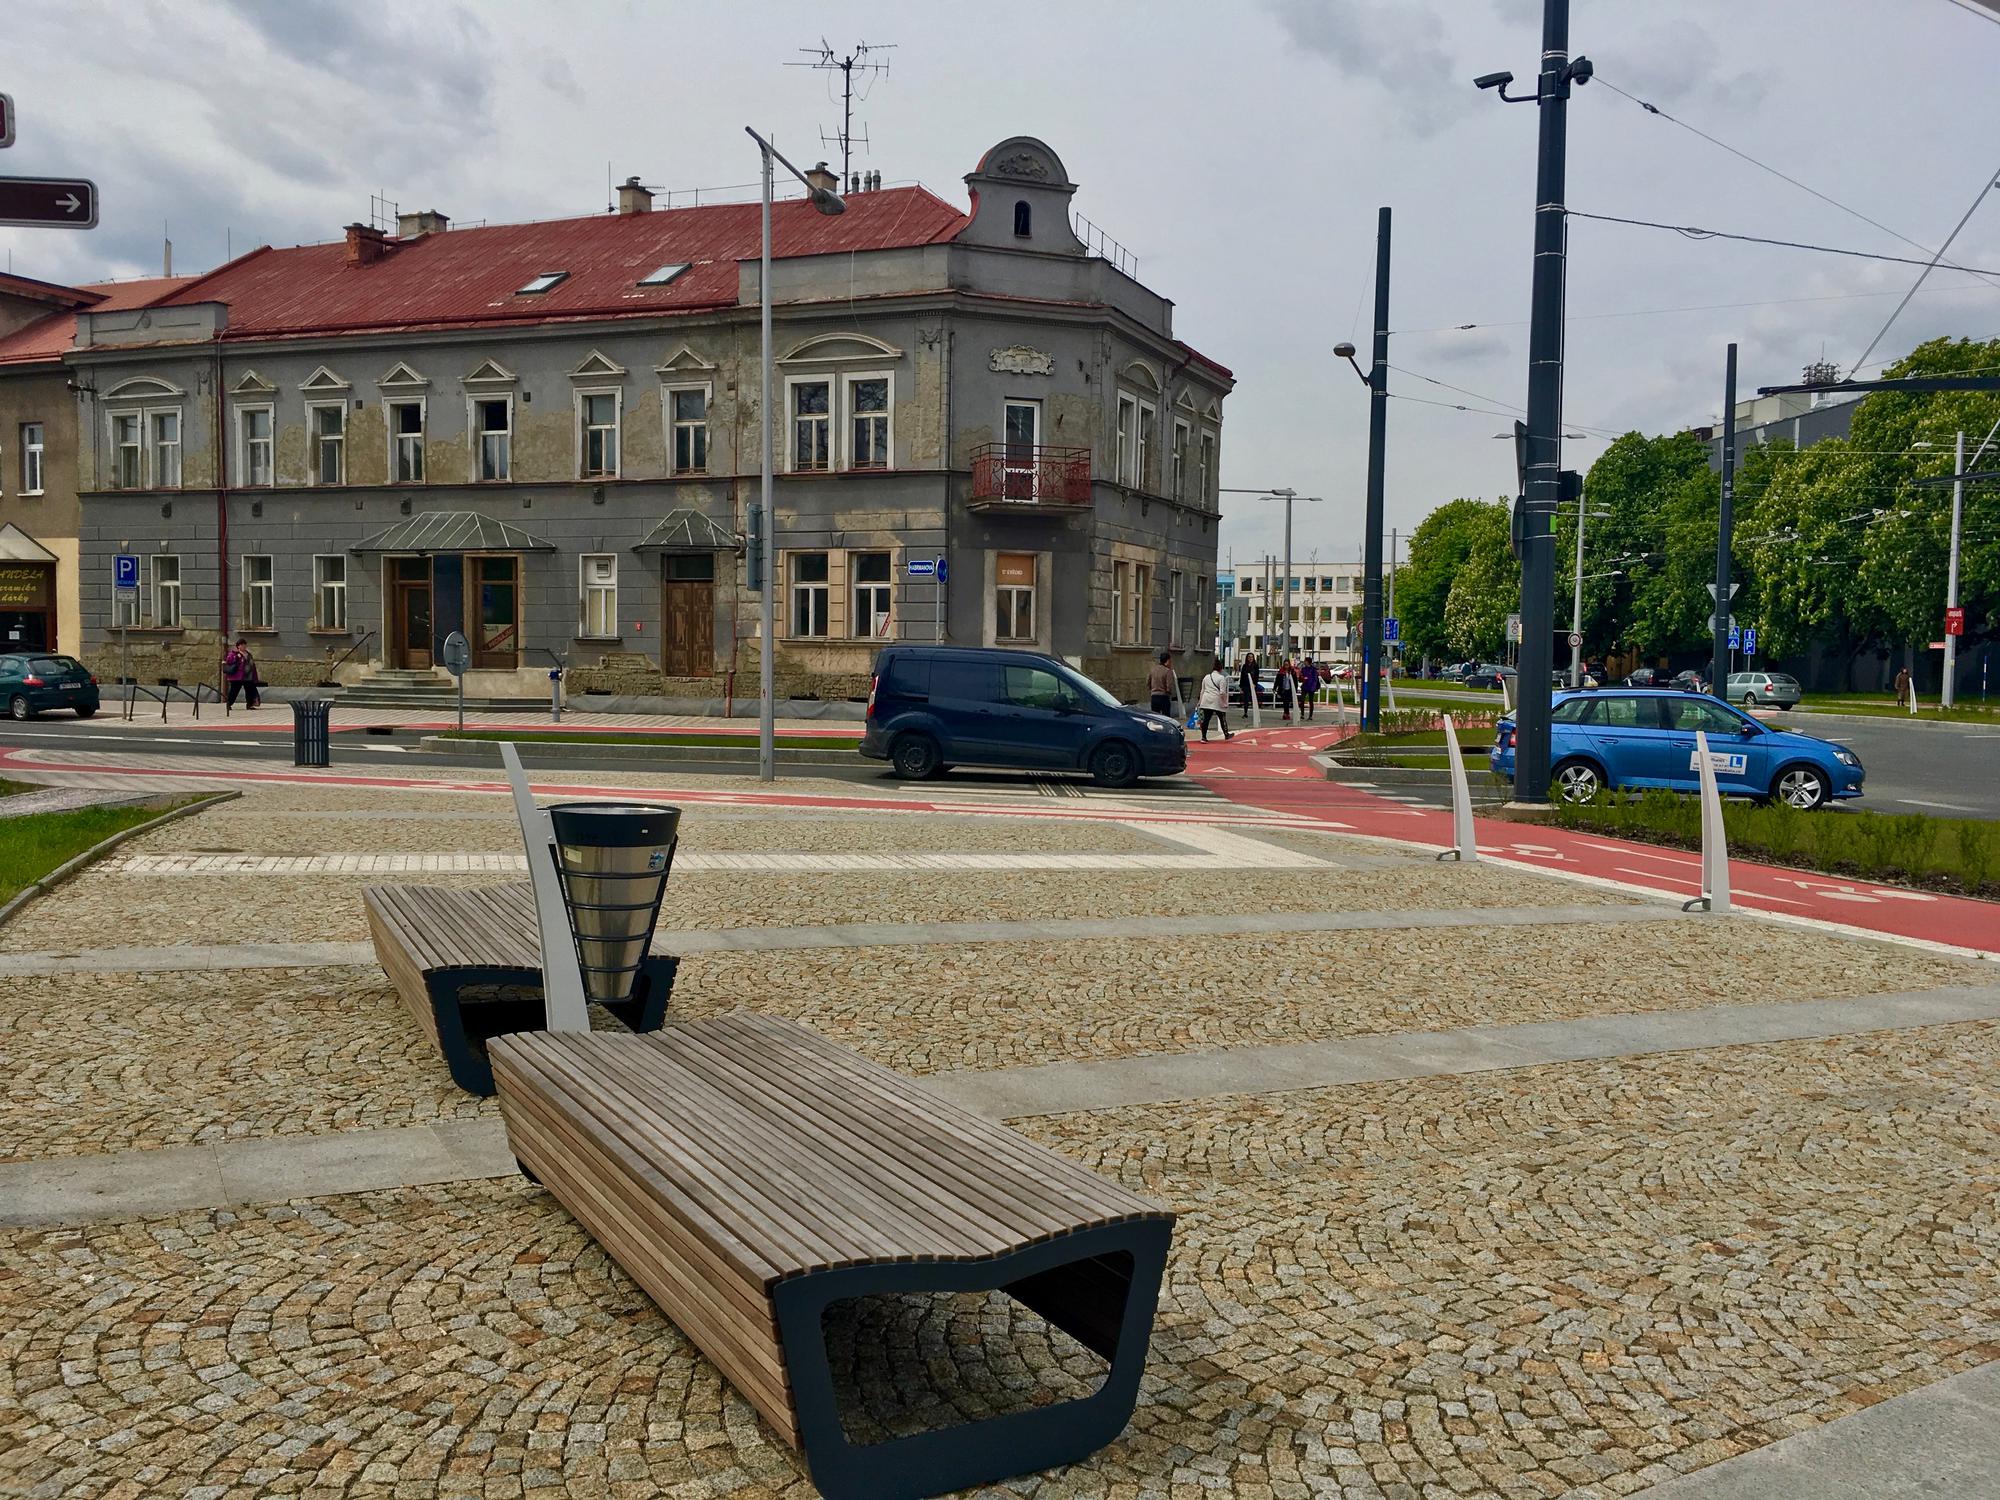 🇨🇿 Hradec Kralove, Czech Republic, May 2017.